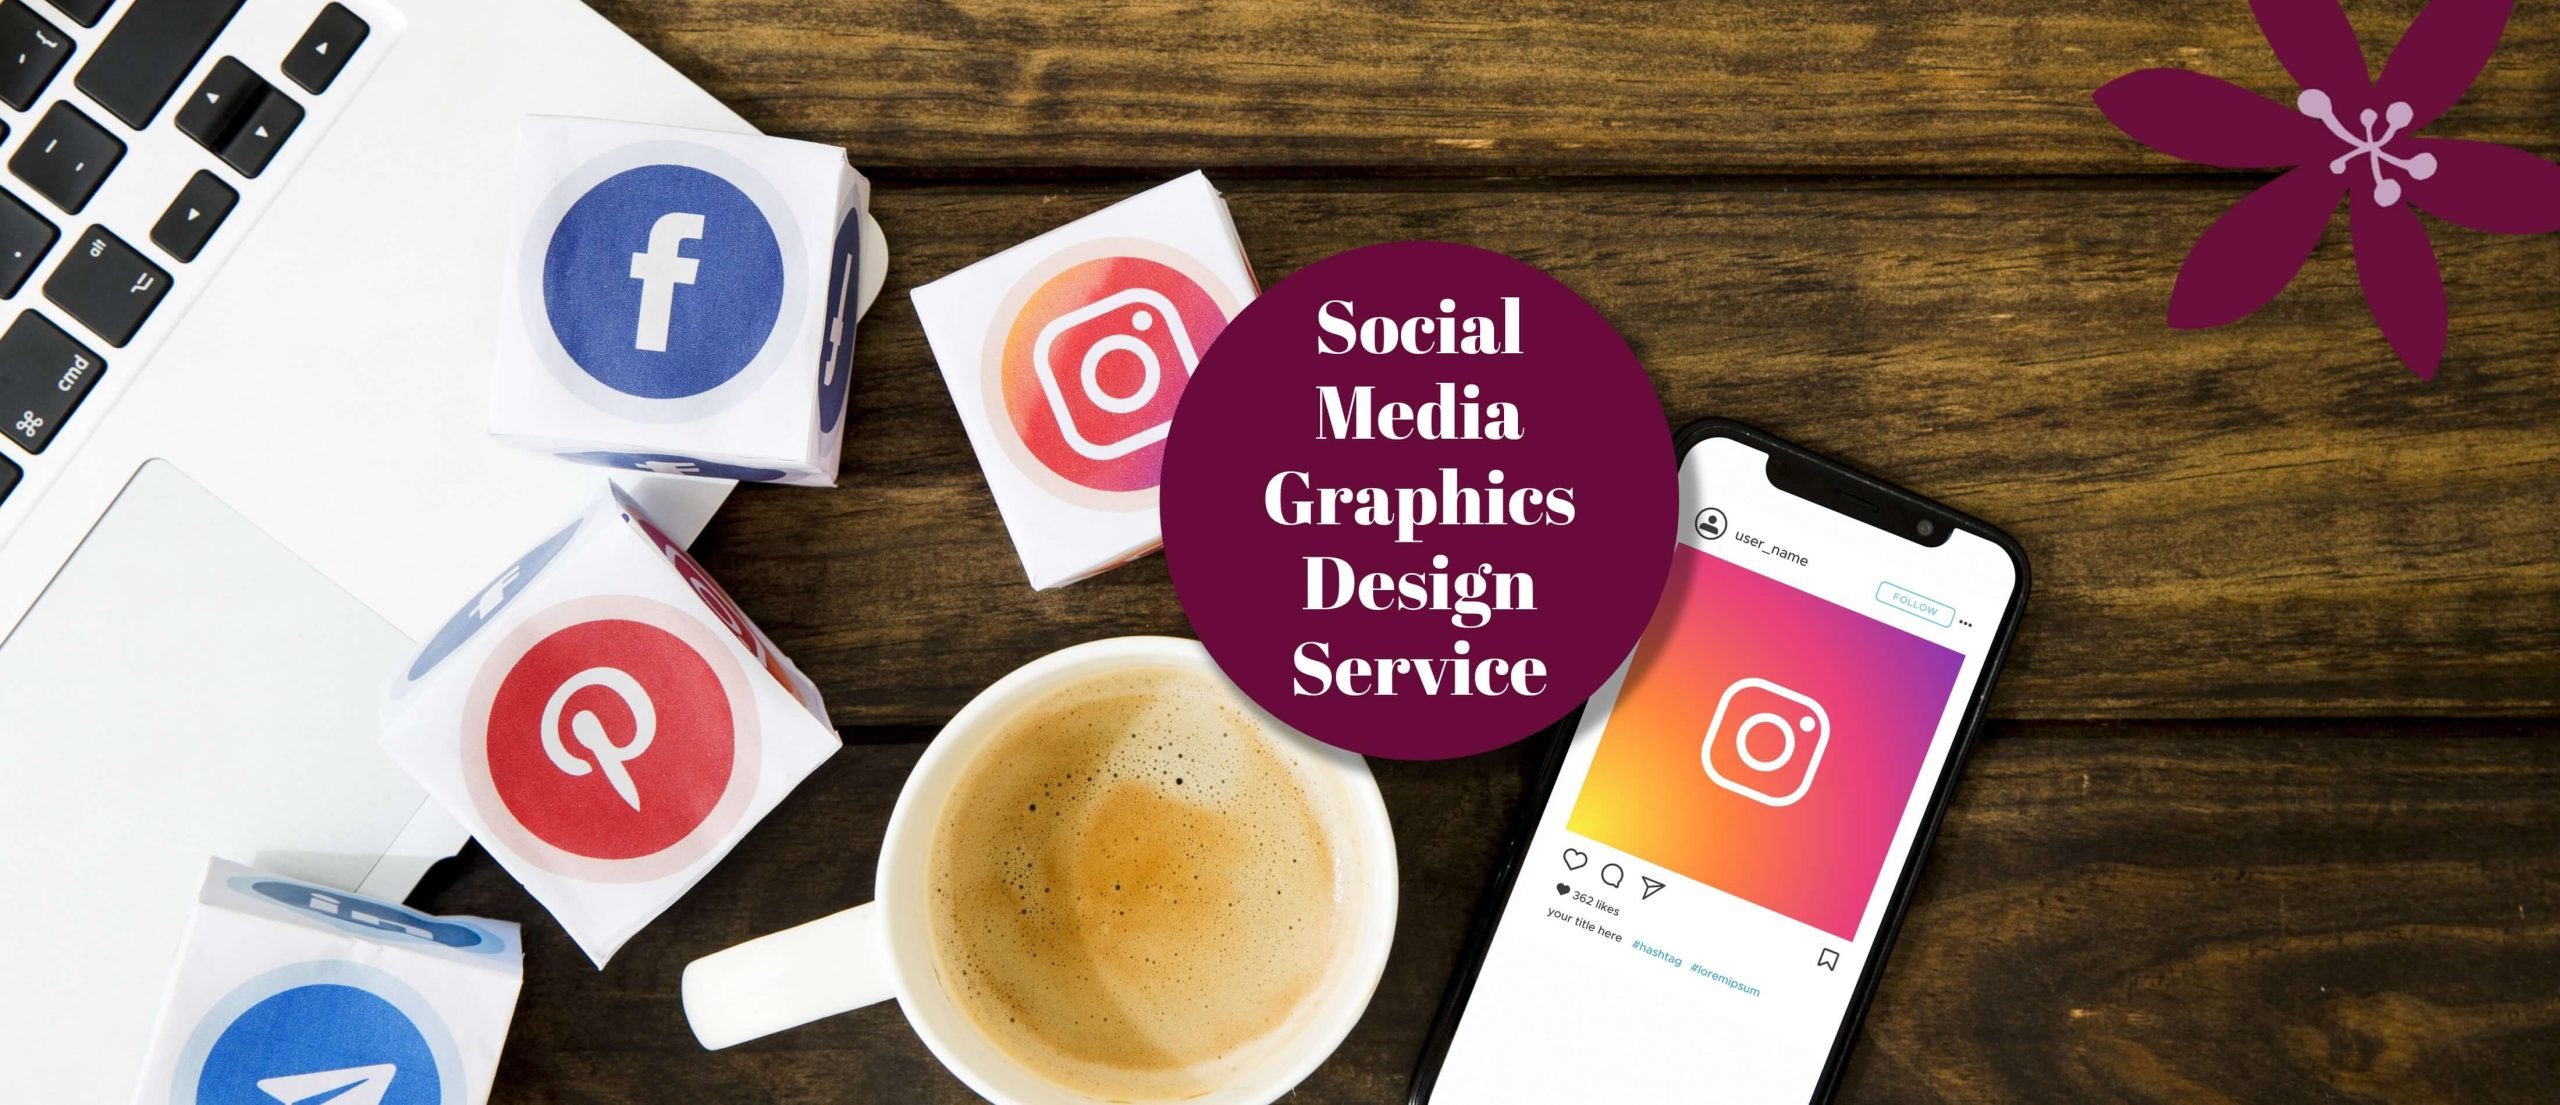 social-media-graphics-design-service_cover